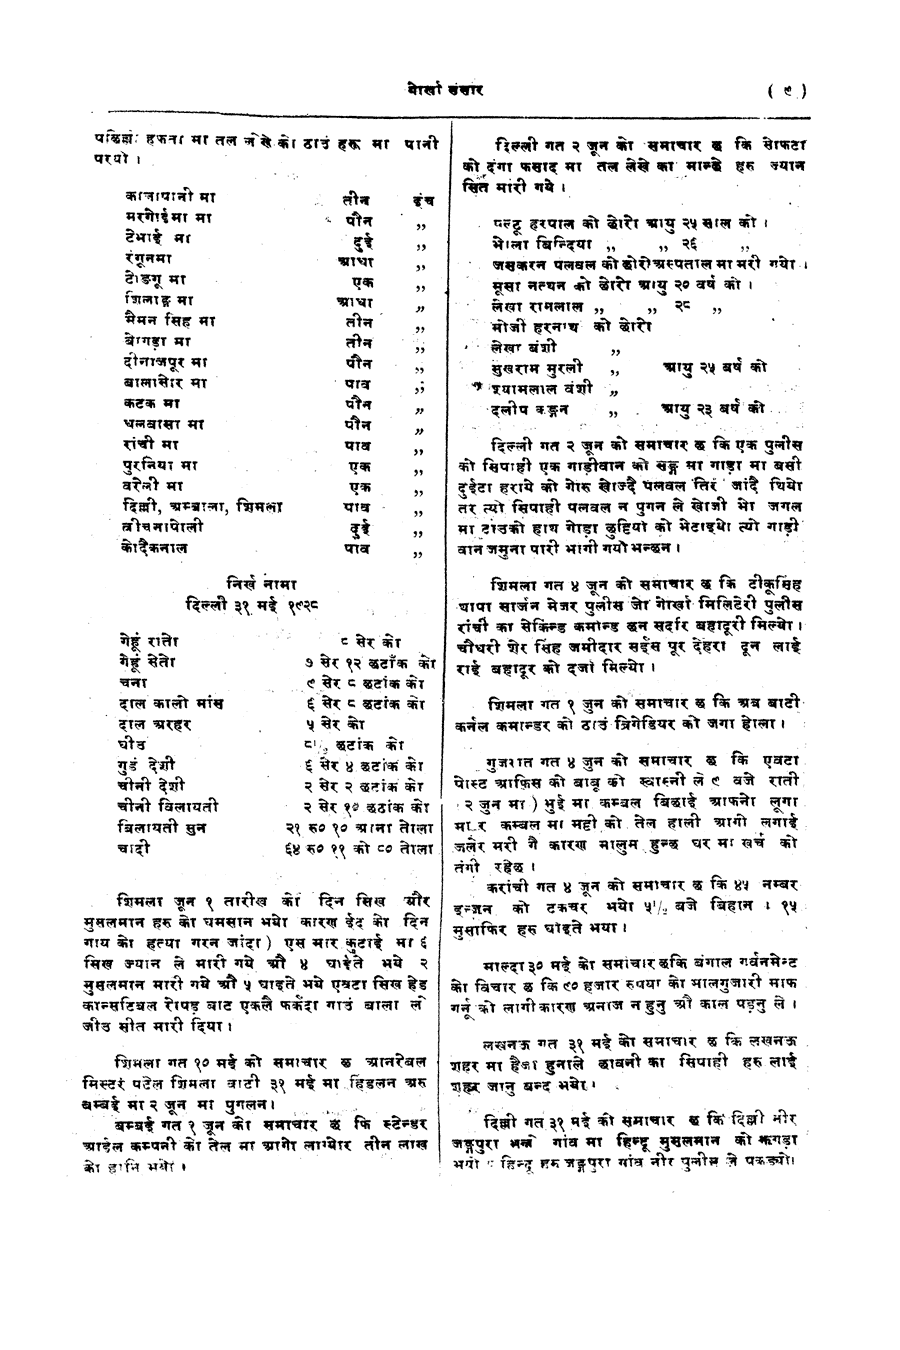 Gorkha Sansar, 8 June 1928, page 9